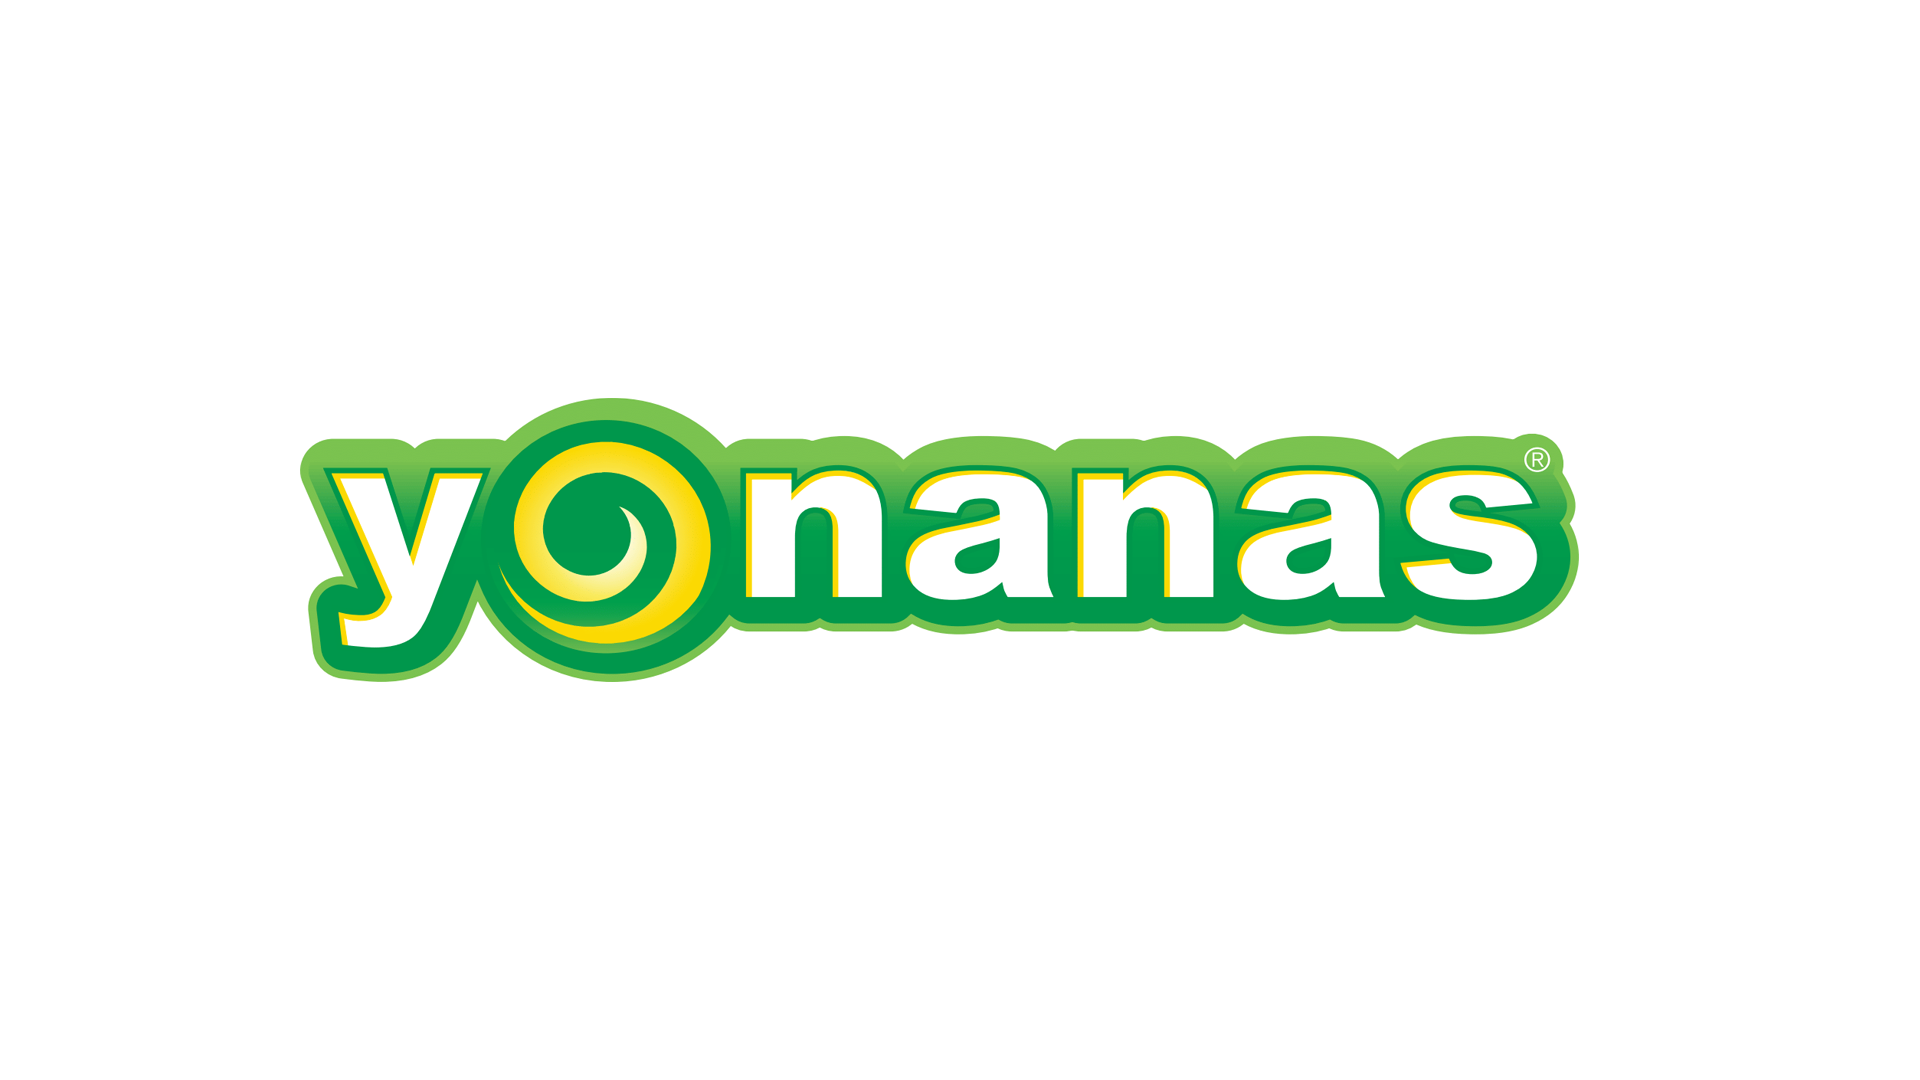 Yonanas